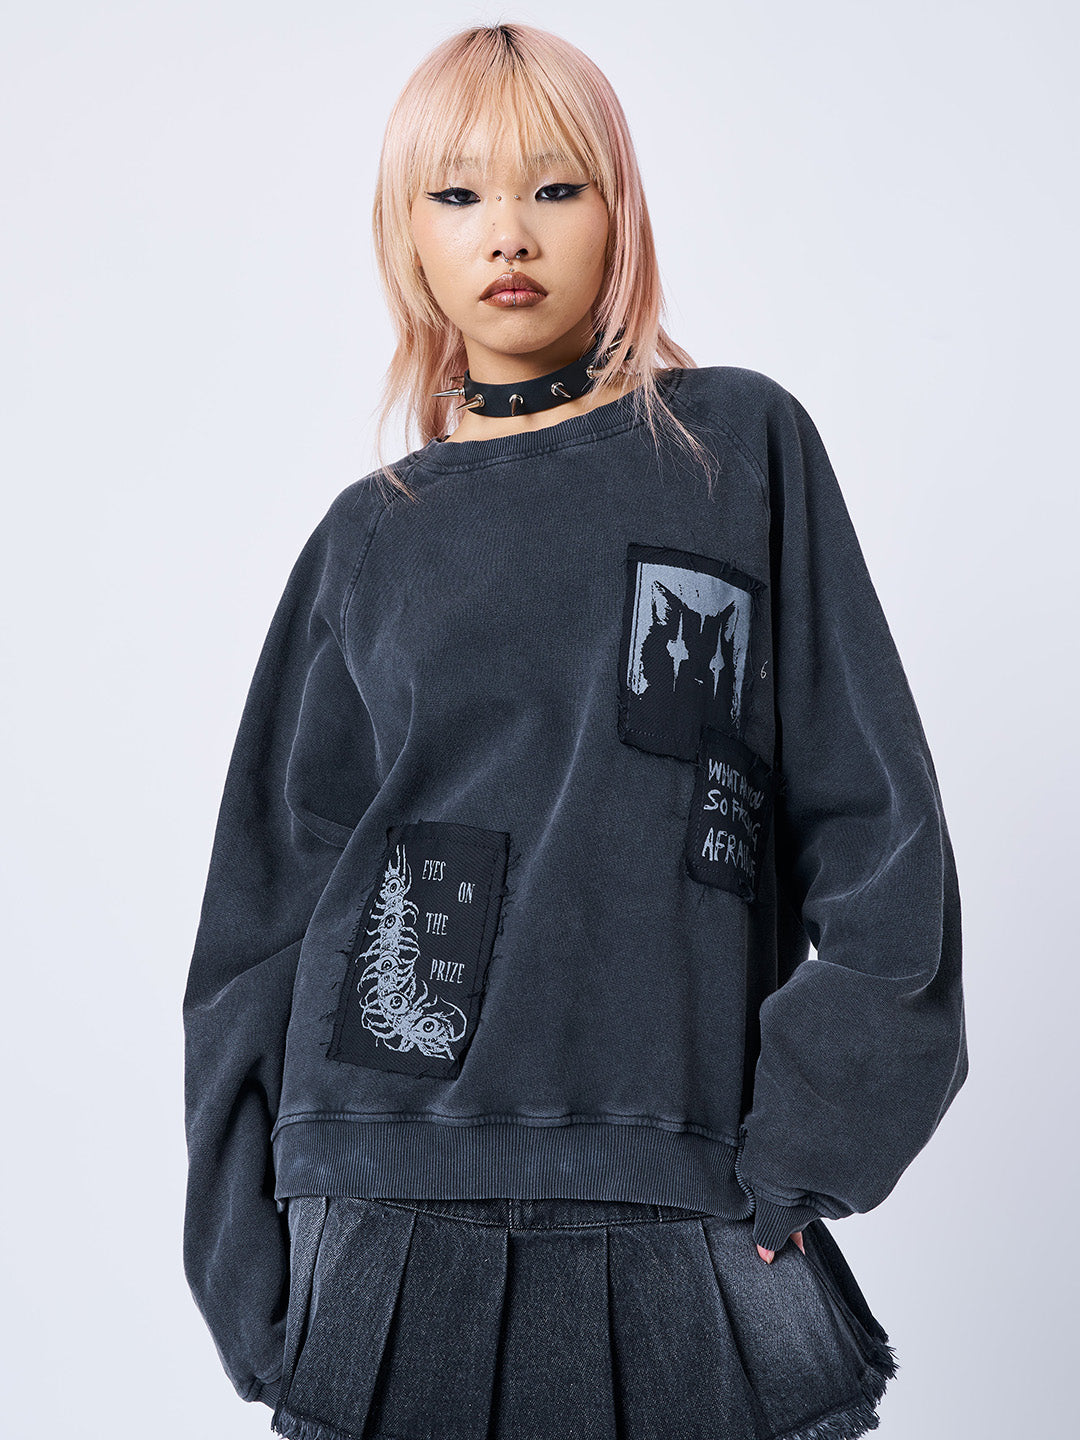 Don’t Cross Kitty Black Graphic Sweatshirt